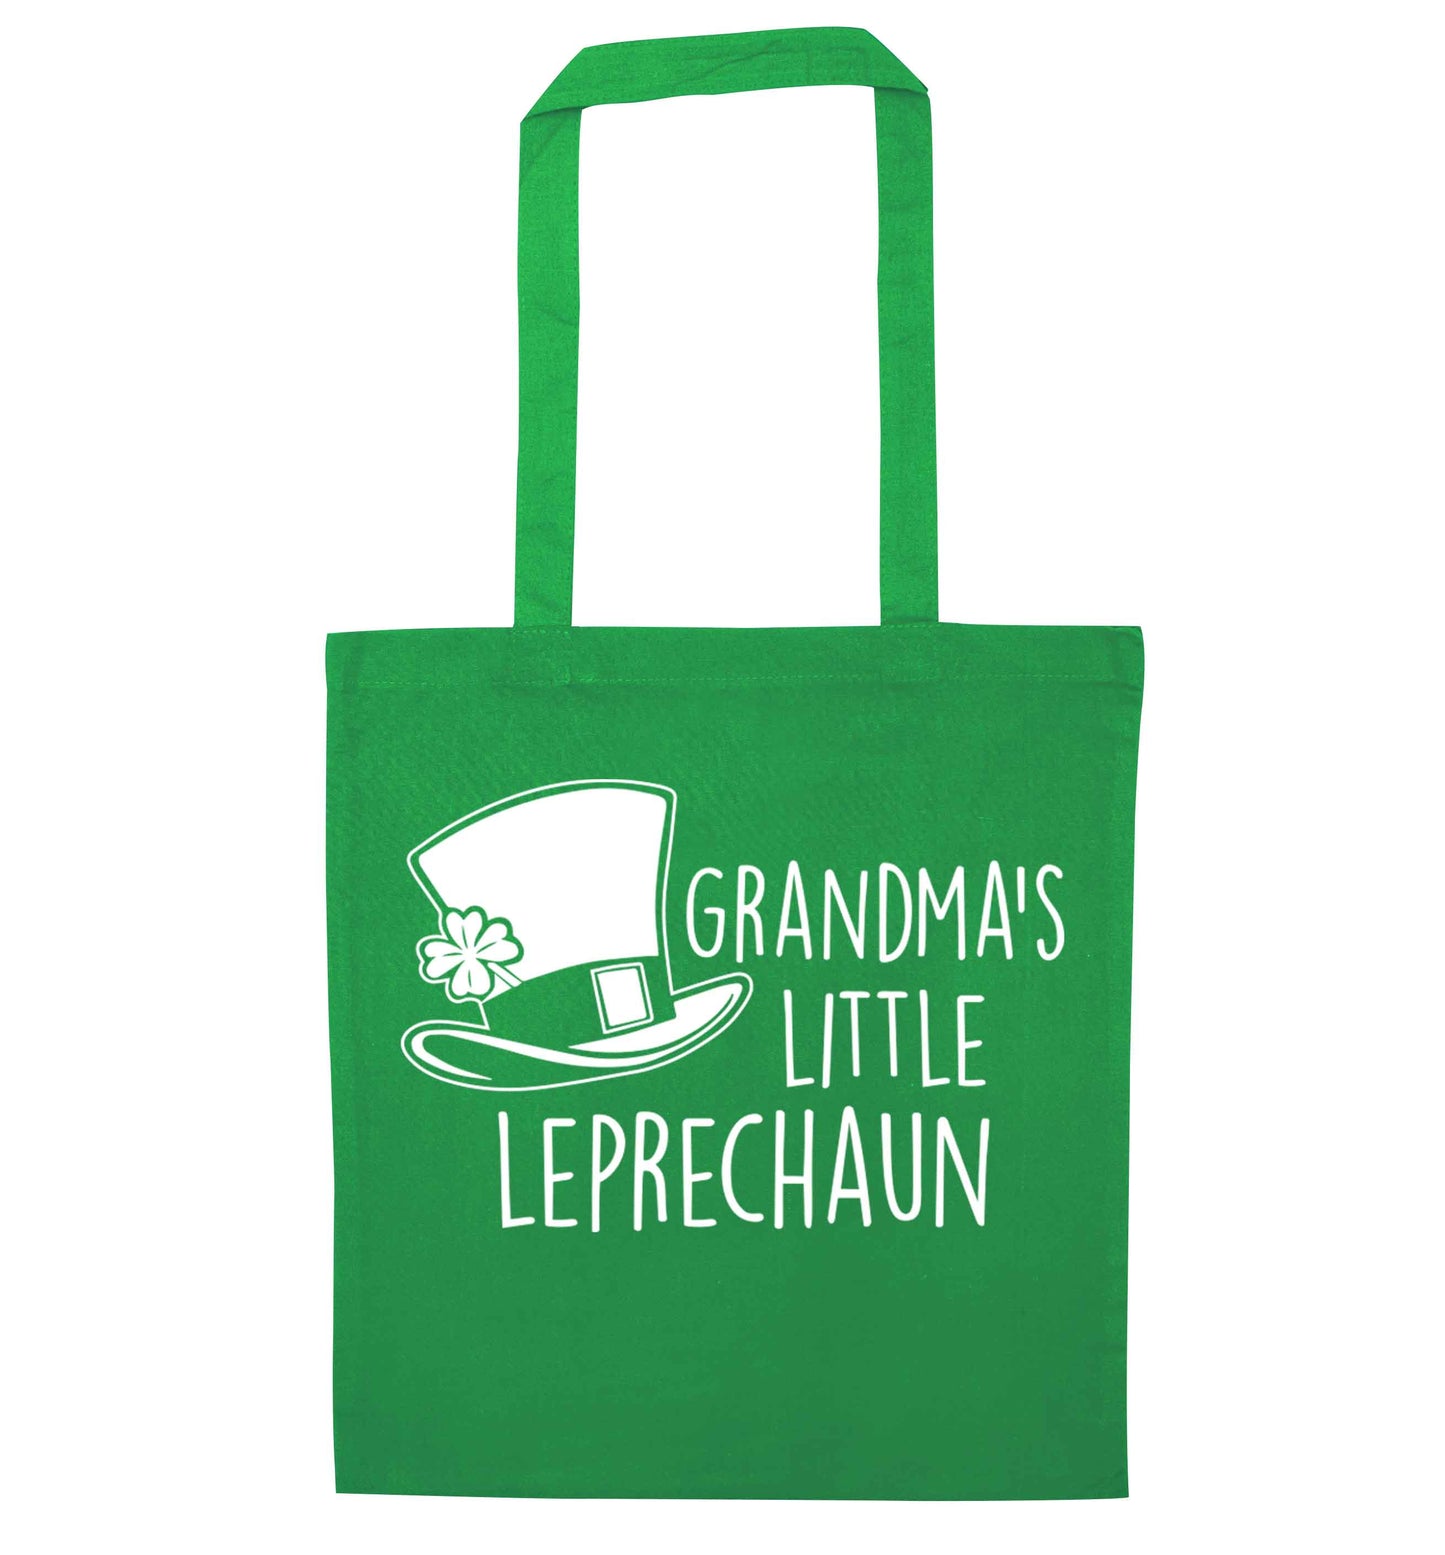 Grandma's little leprechaun green tote bag